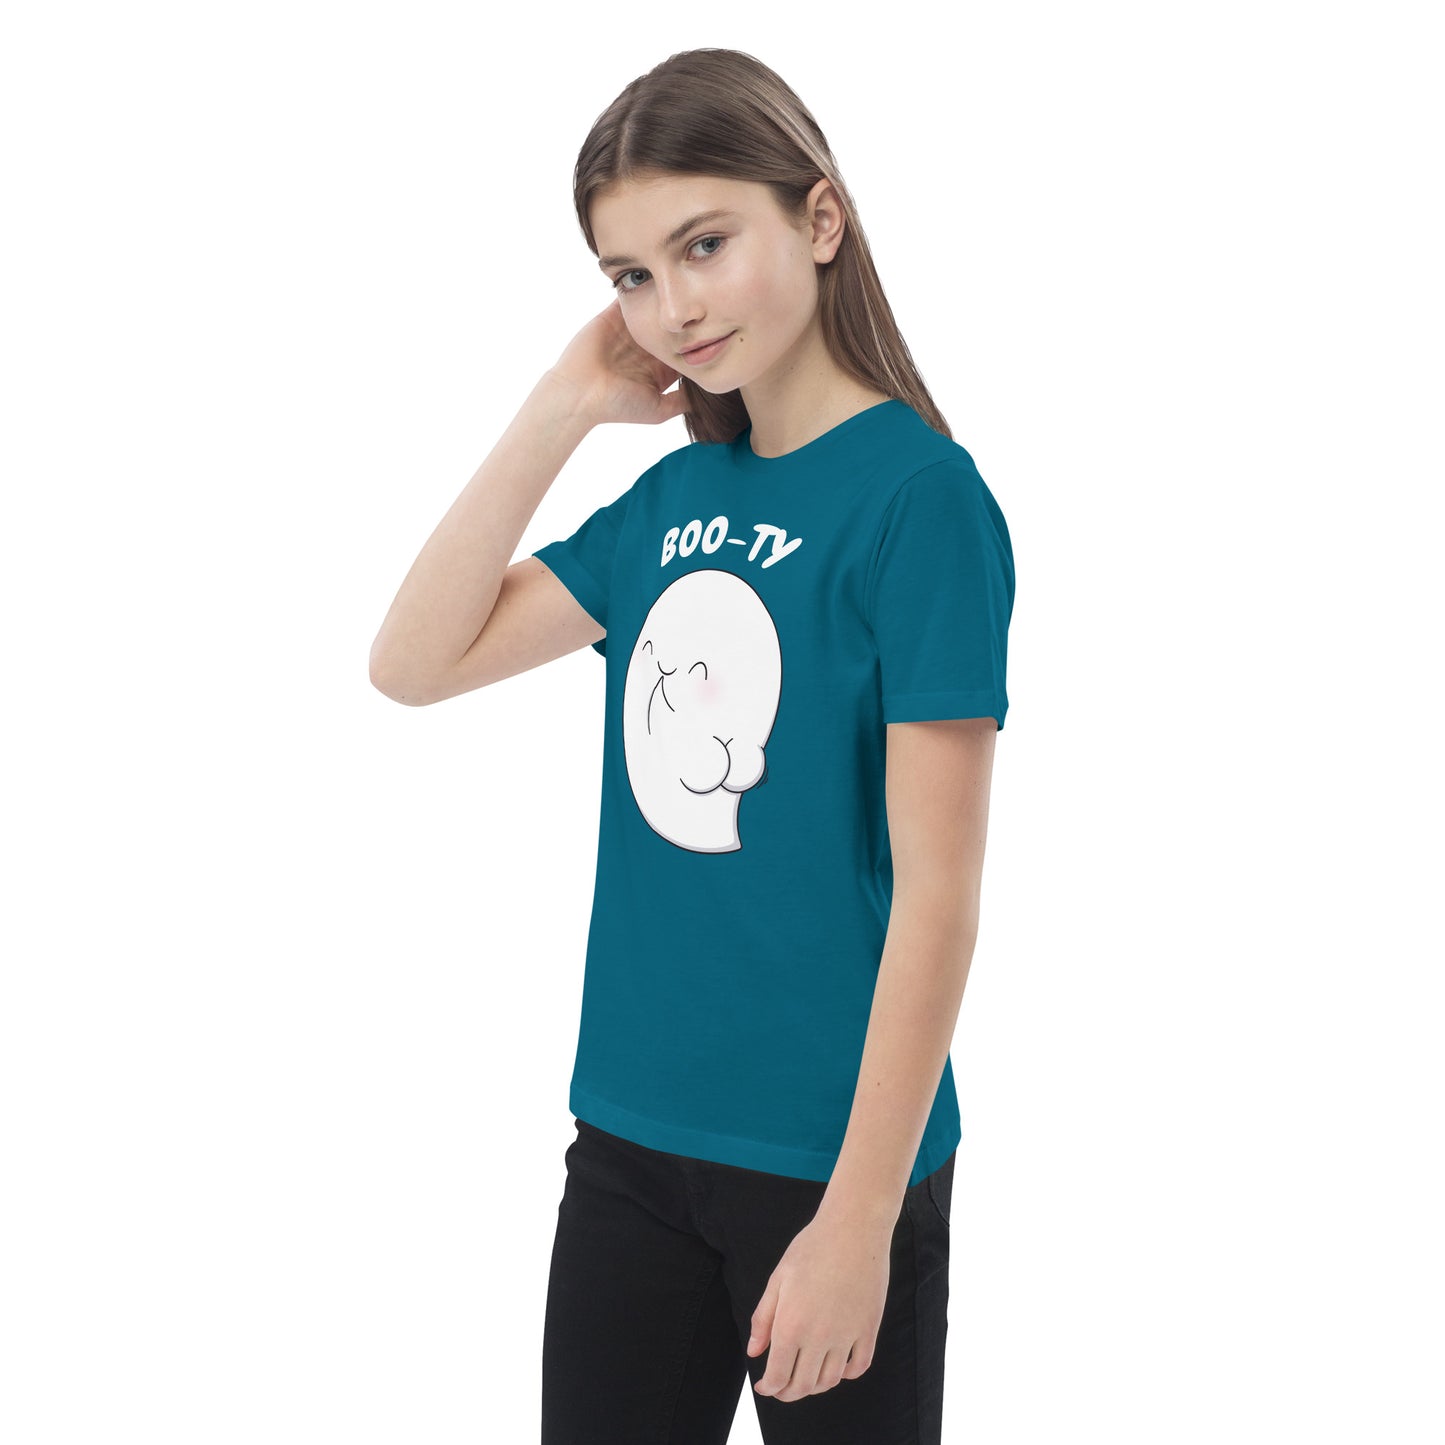 Boo-ty - Organic cotton kids t-shirt